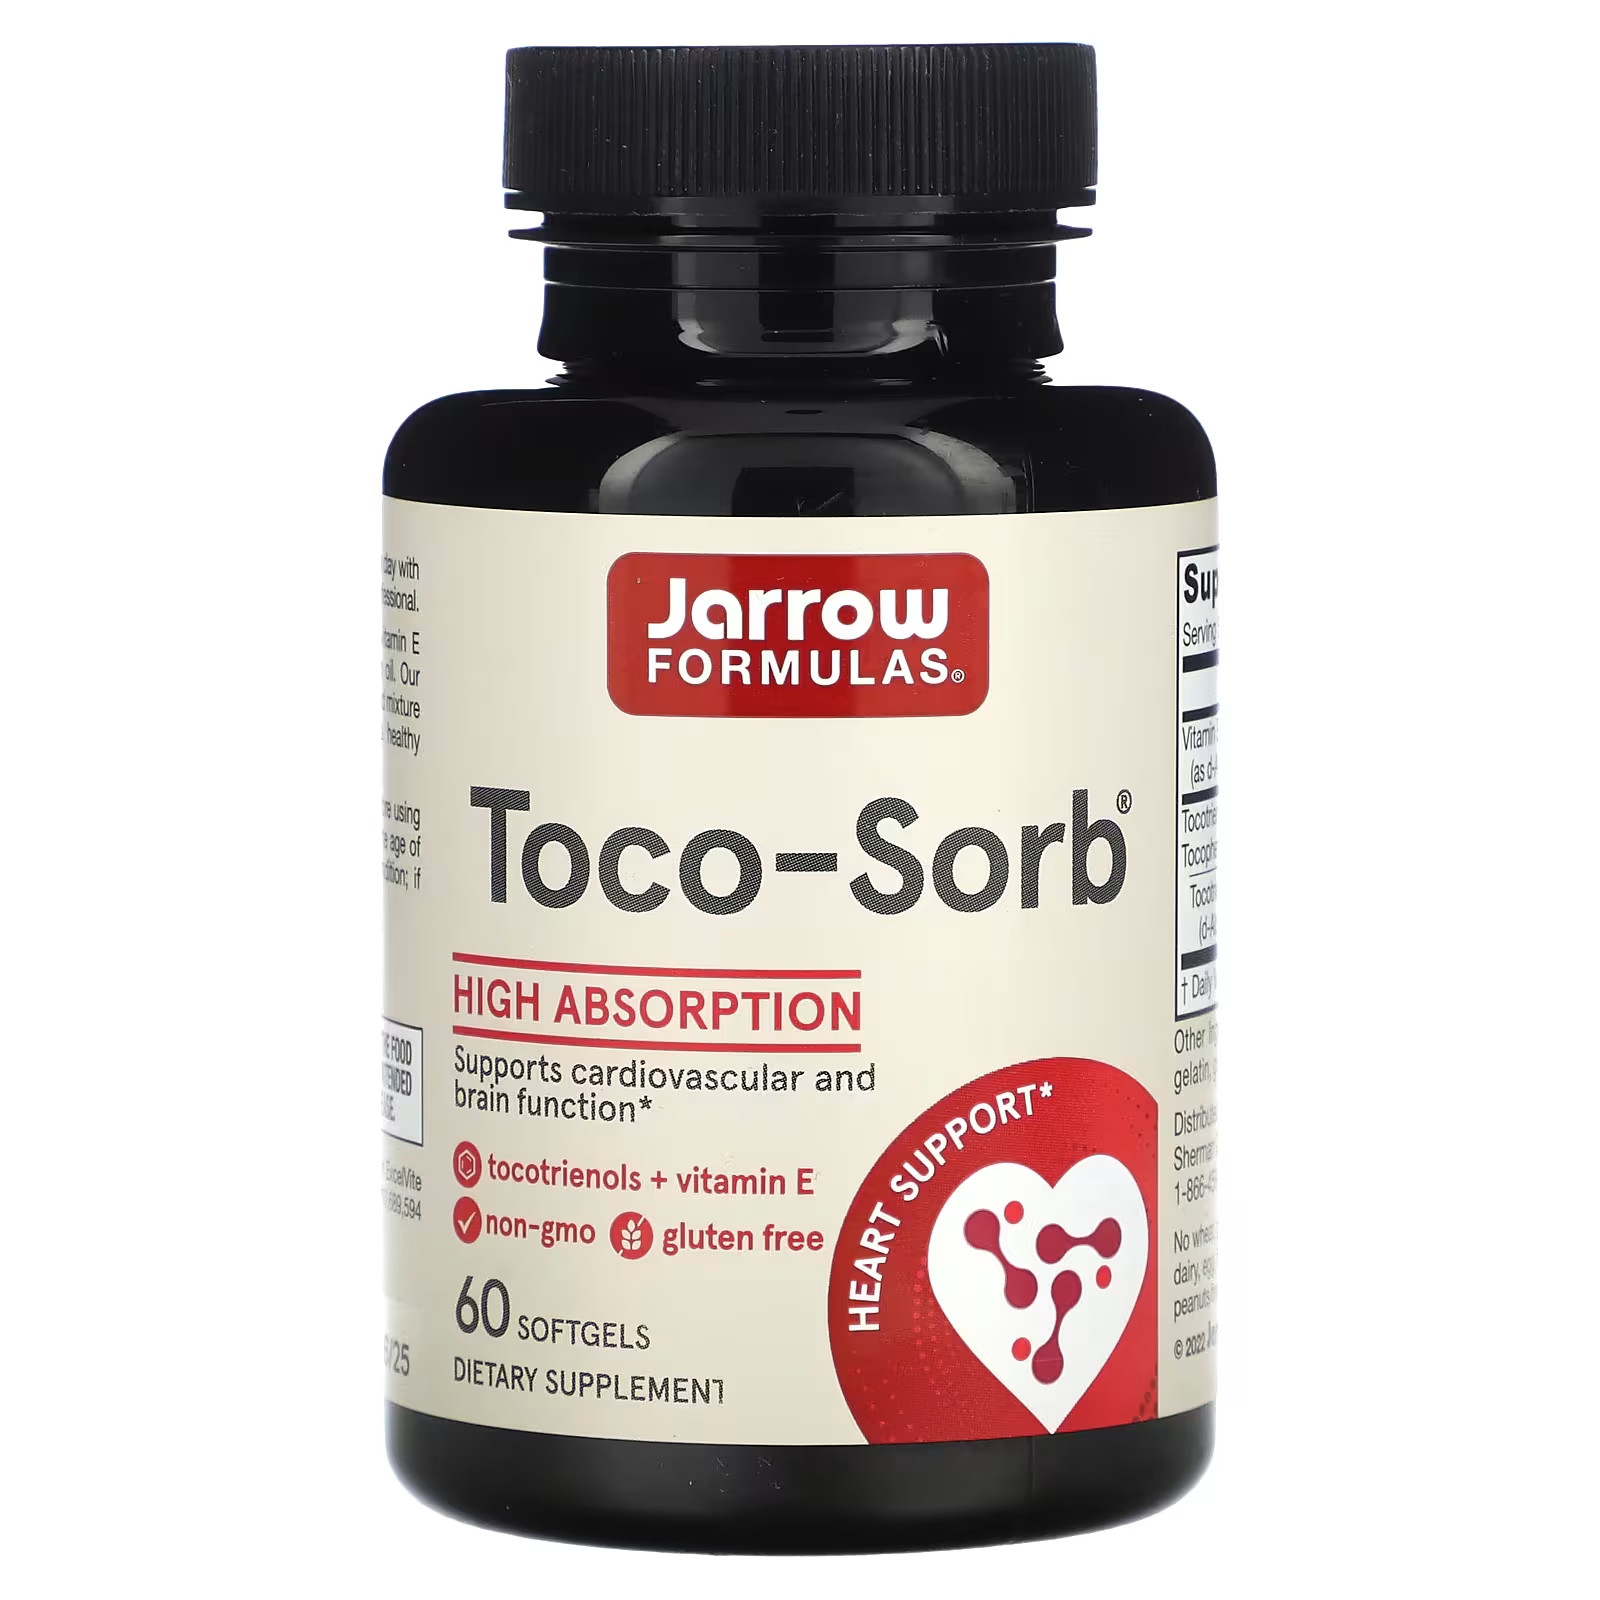 Jarrow Formulas Toco-Sorb 60 мягких таблеток смесь токотриенолов и витамина е toco sorb 60 таблеток jarrow formula